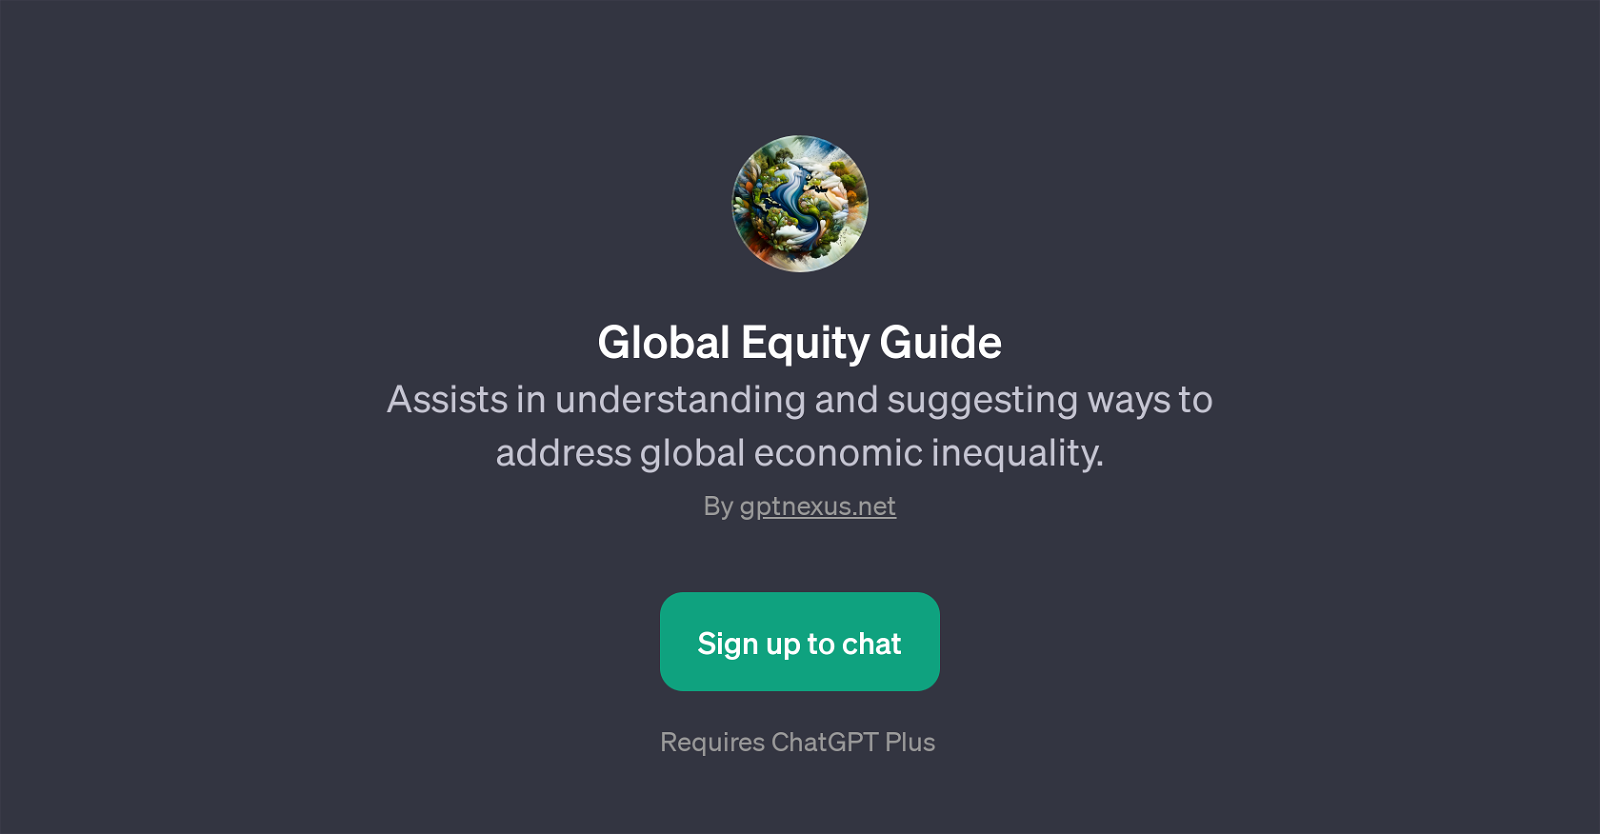 Global Equity Guide website